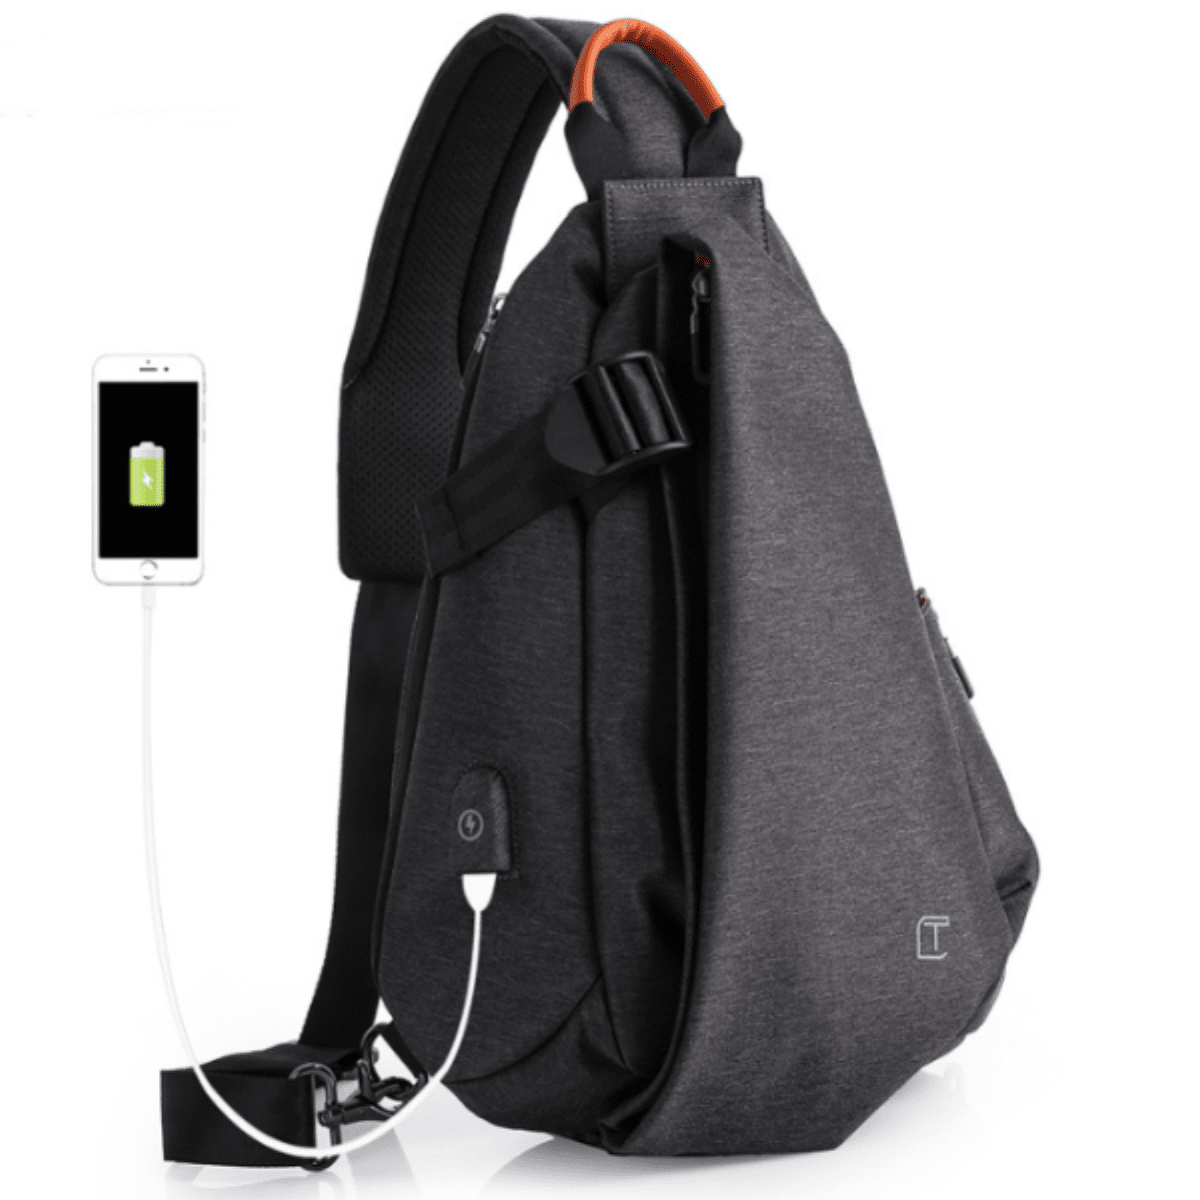 Premium Chest Bag with USB Slot - American Legend Rider